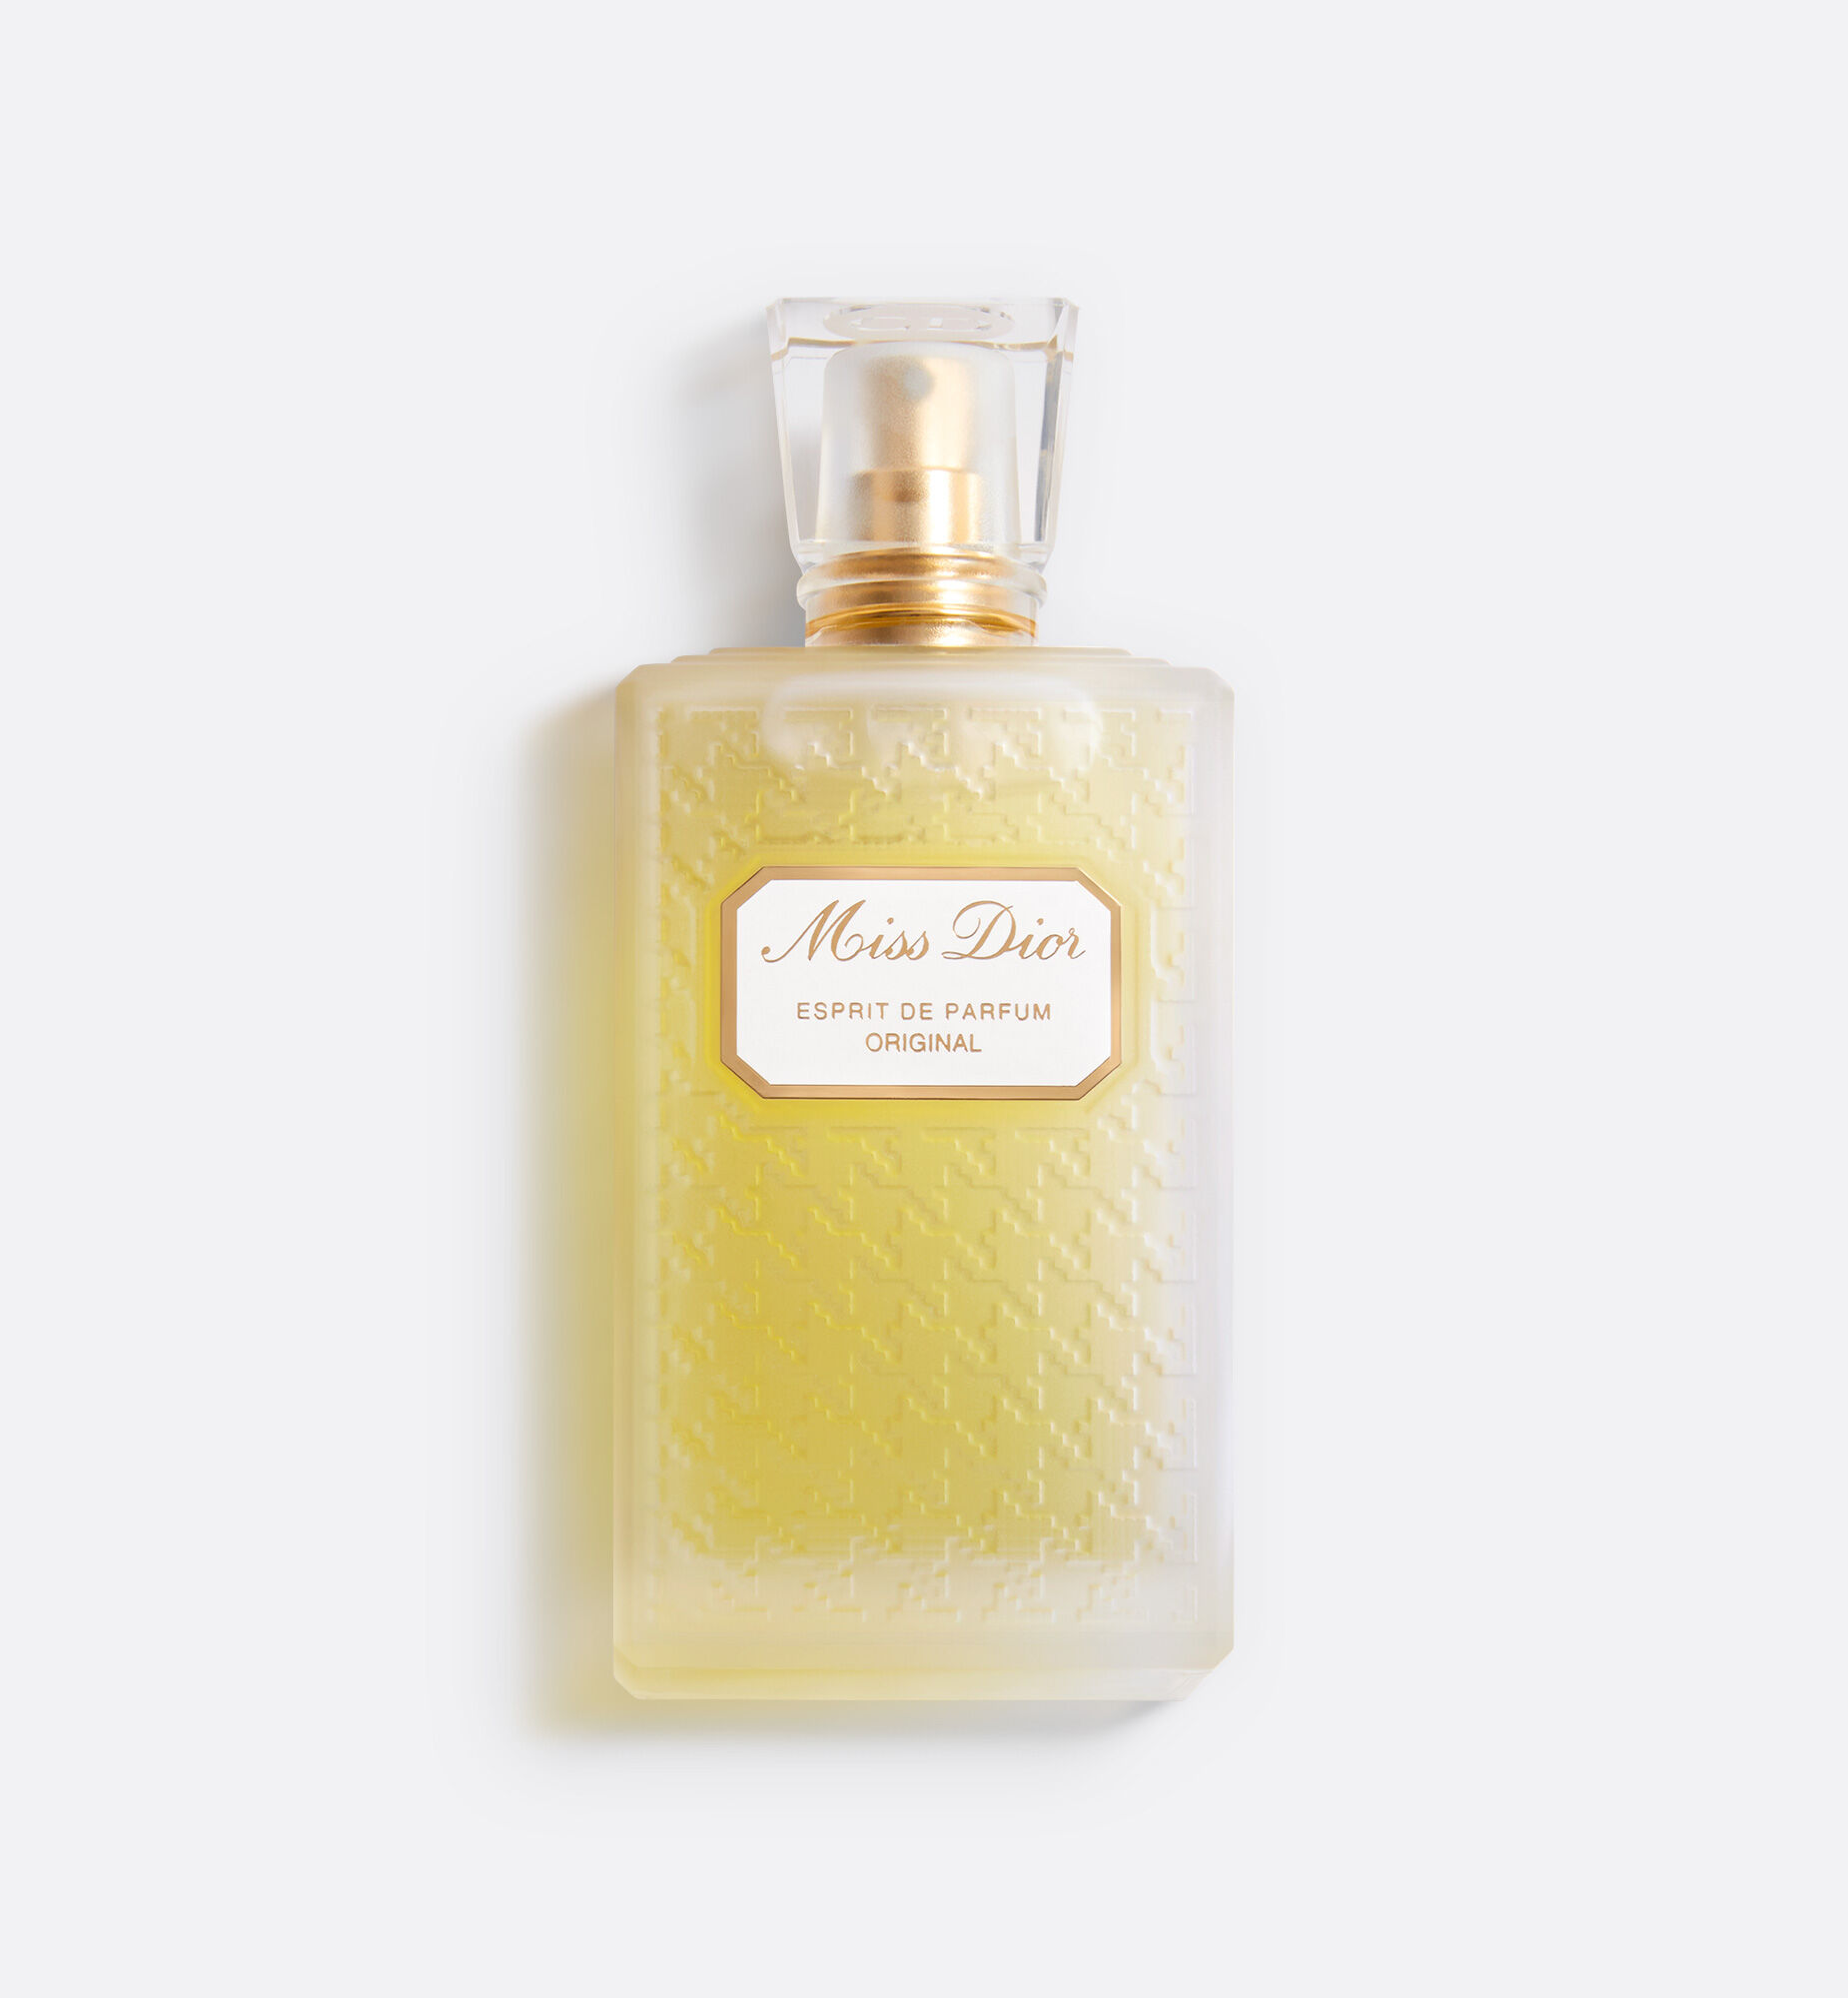 Miss Dior Original Esprit de parfum - Profumi Donna - Fragranze | DIOR